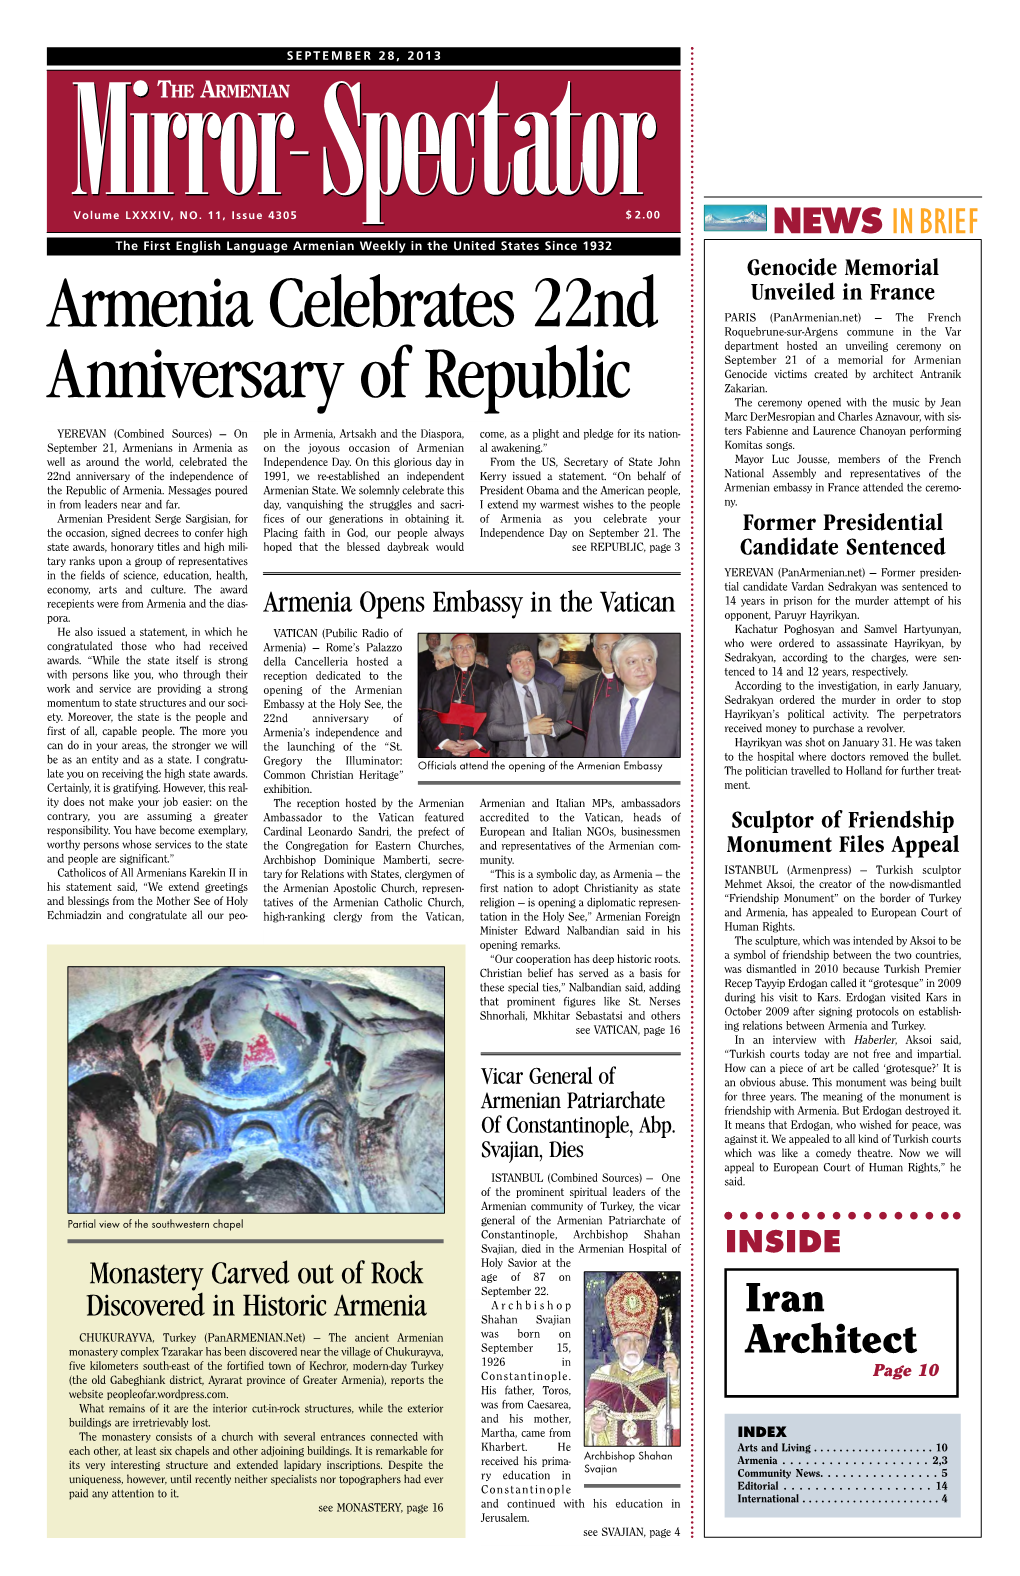 Armenia Celebrates 22Nd Anniversary of Republic